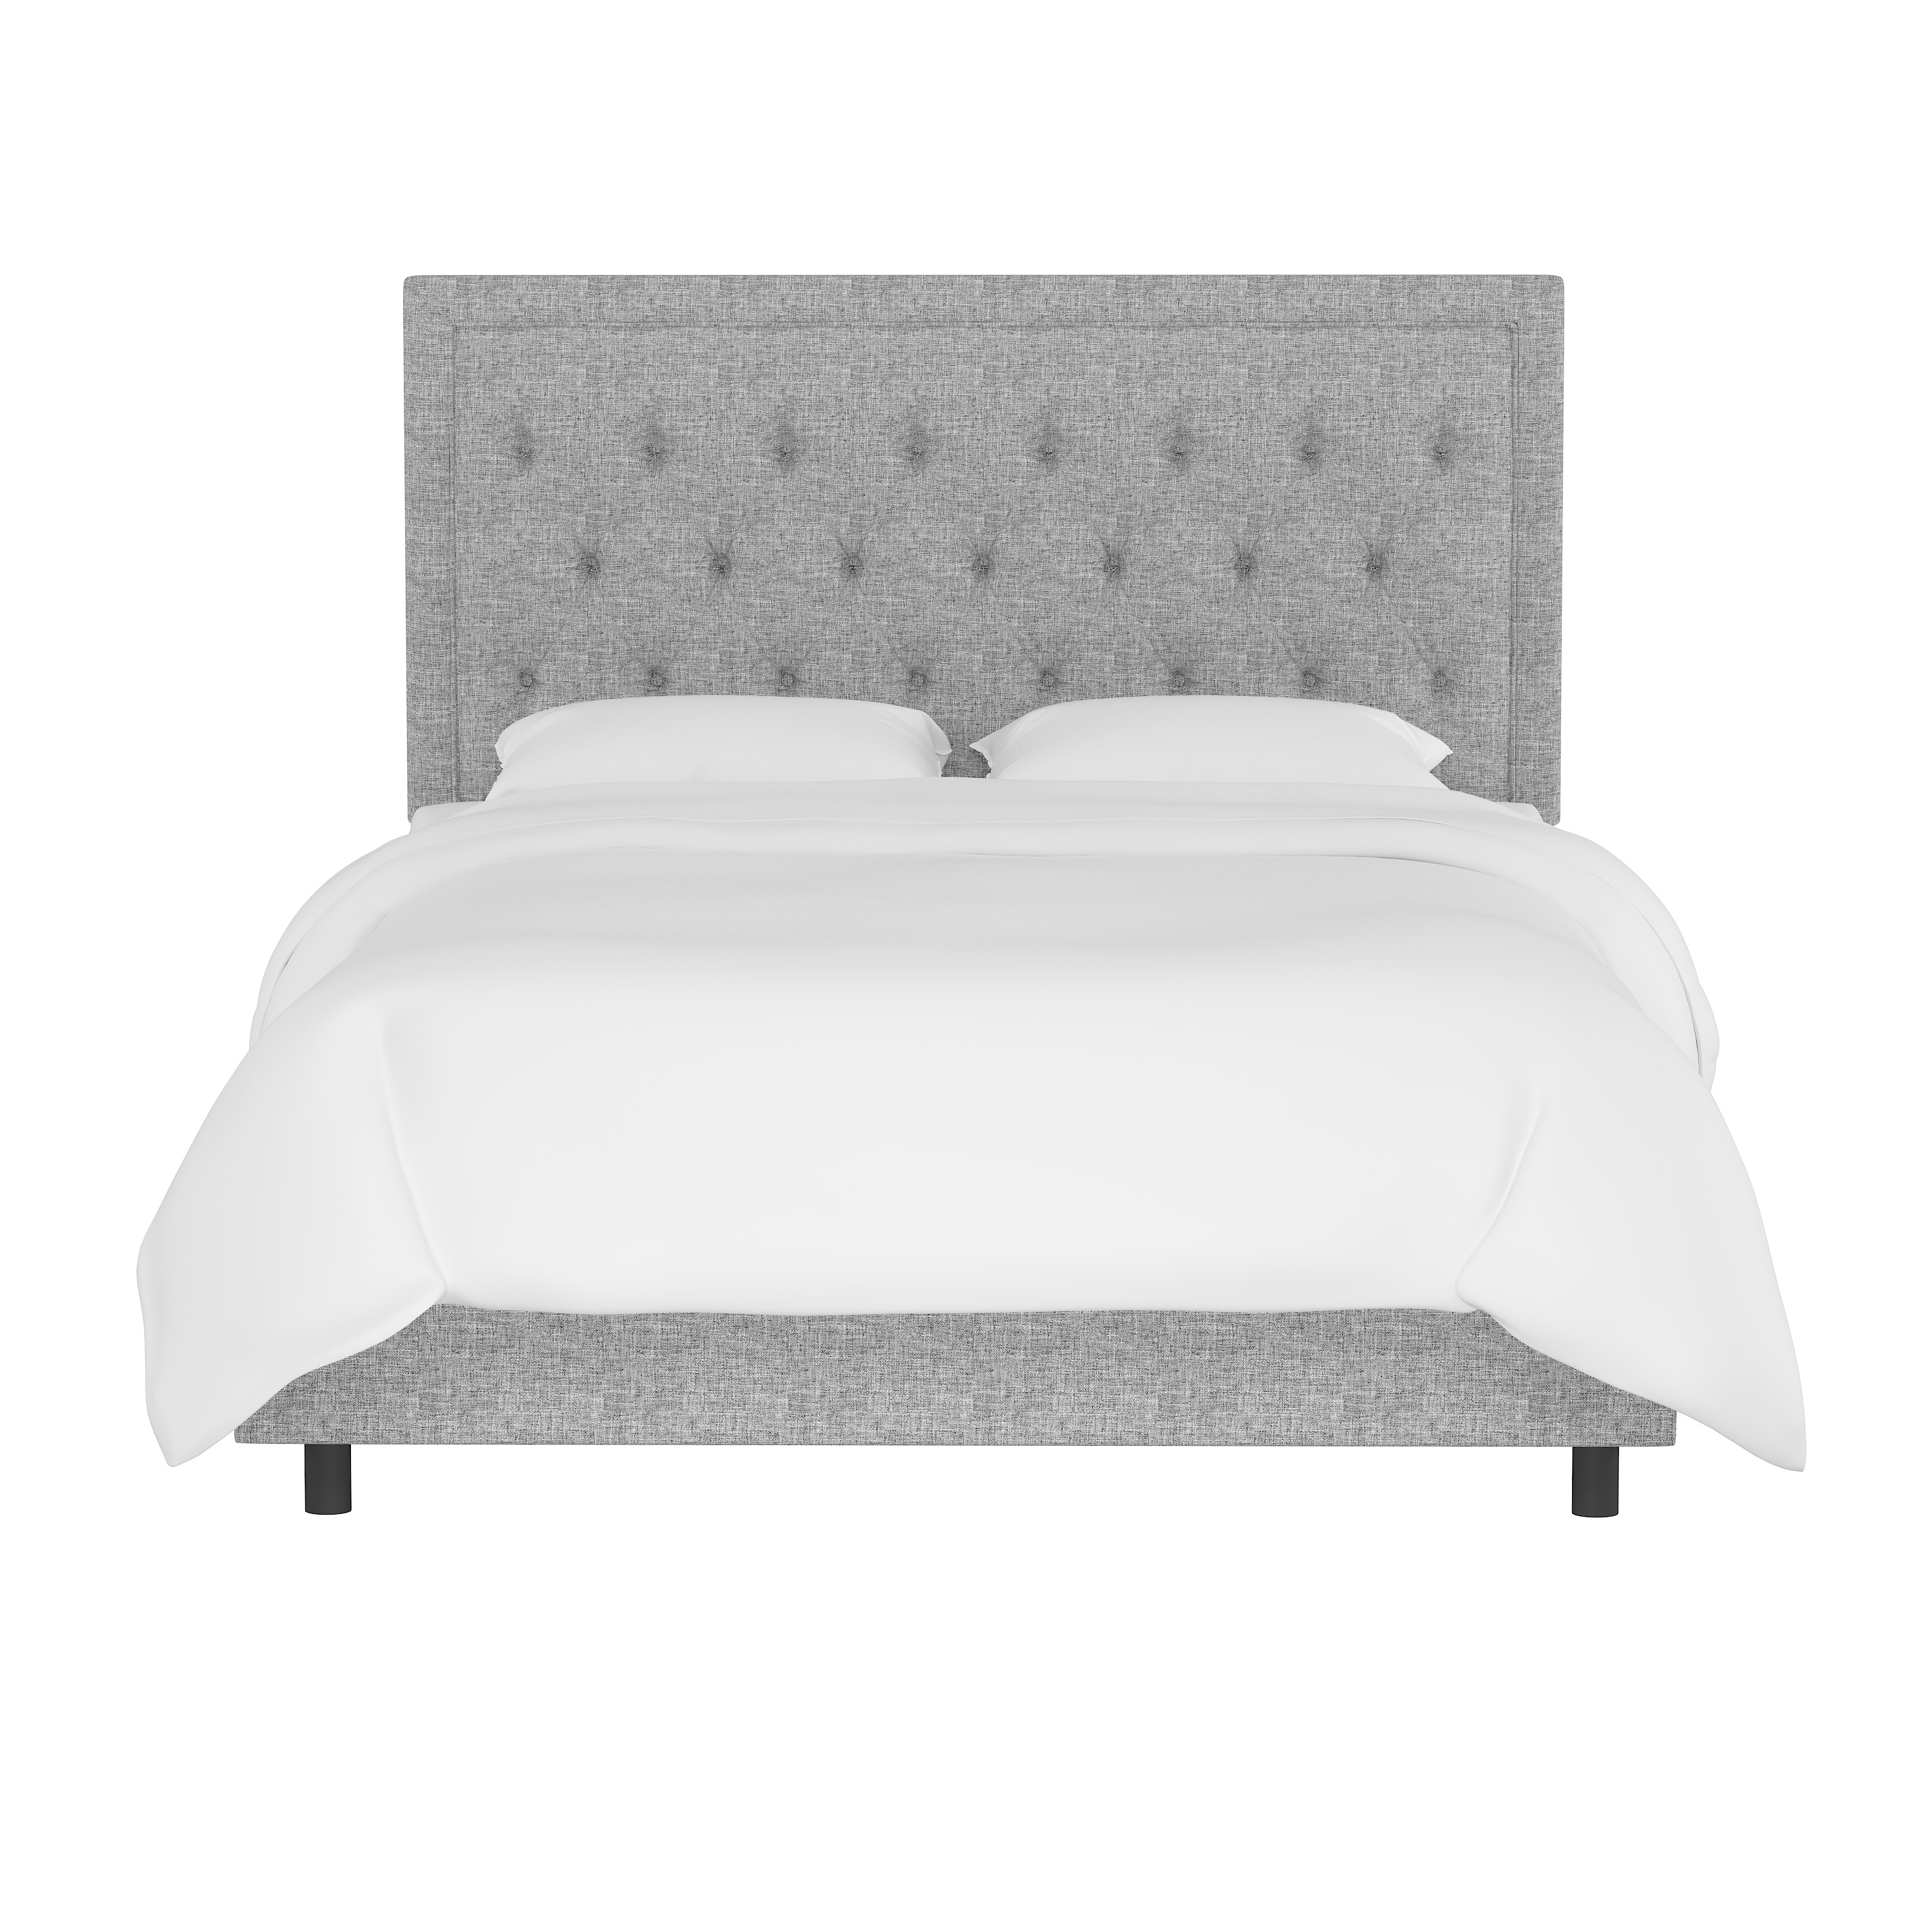 Lafayette Bed, Queen, Pumice - Image 1